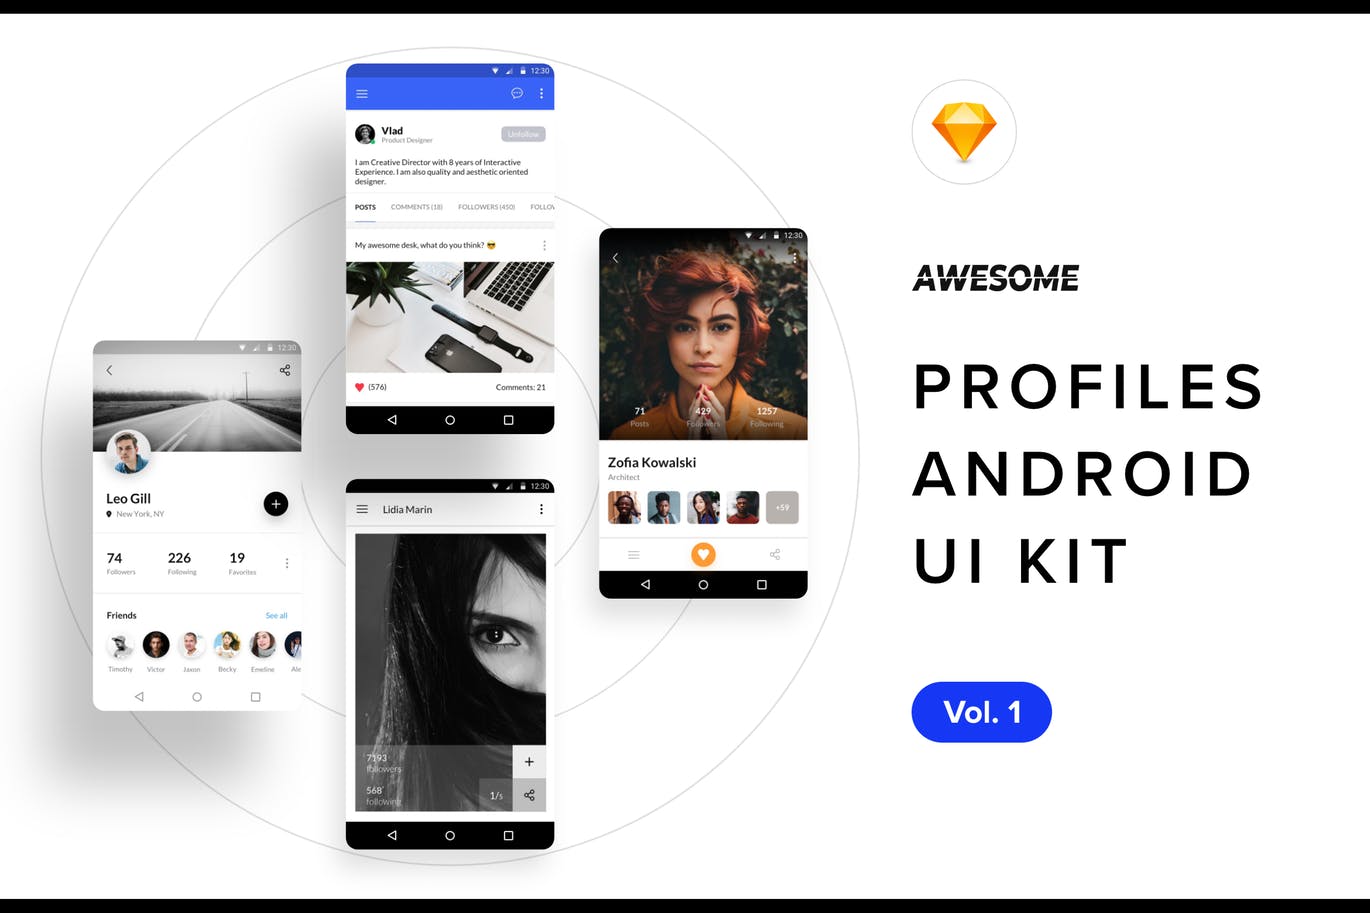 安卓社交APP应用用户中心界面设计模板v1[SKETCH] Android UI Kit – Profiles Vol. 1 (Sketch)插图